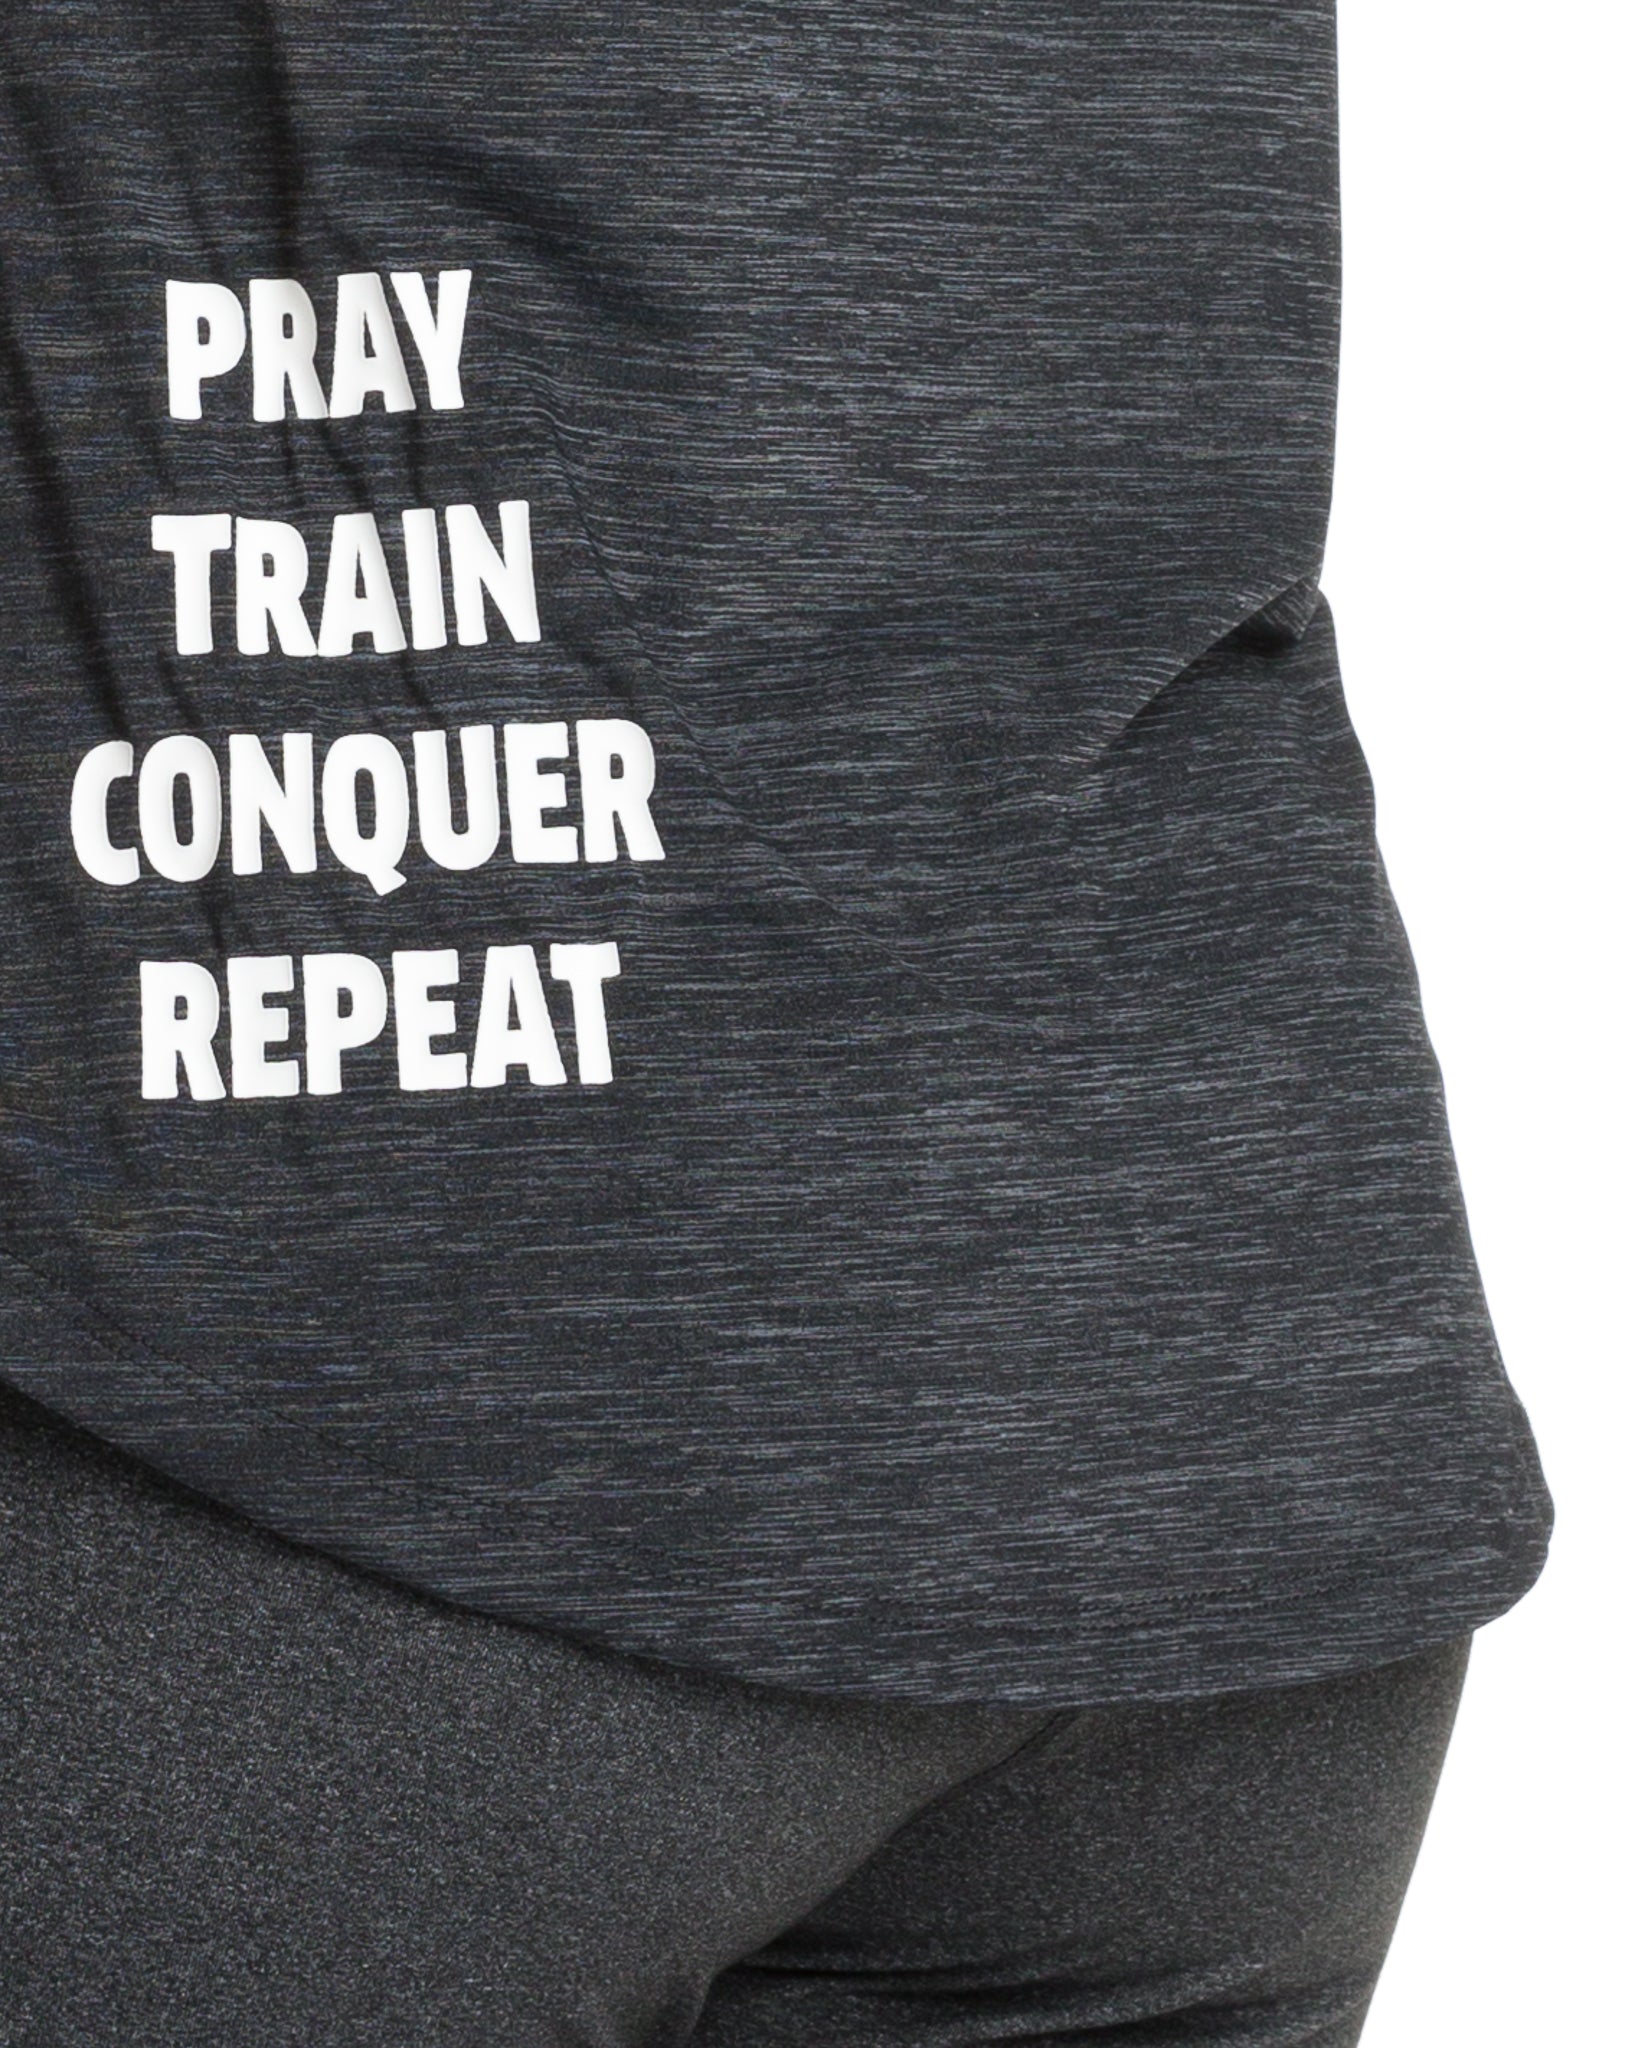 Women's "Pray Repeat" Symbol Shirt